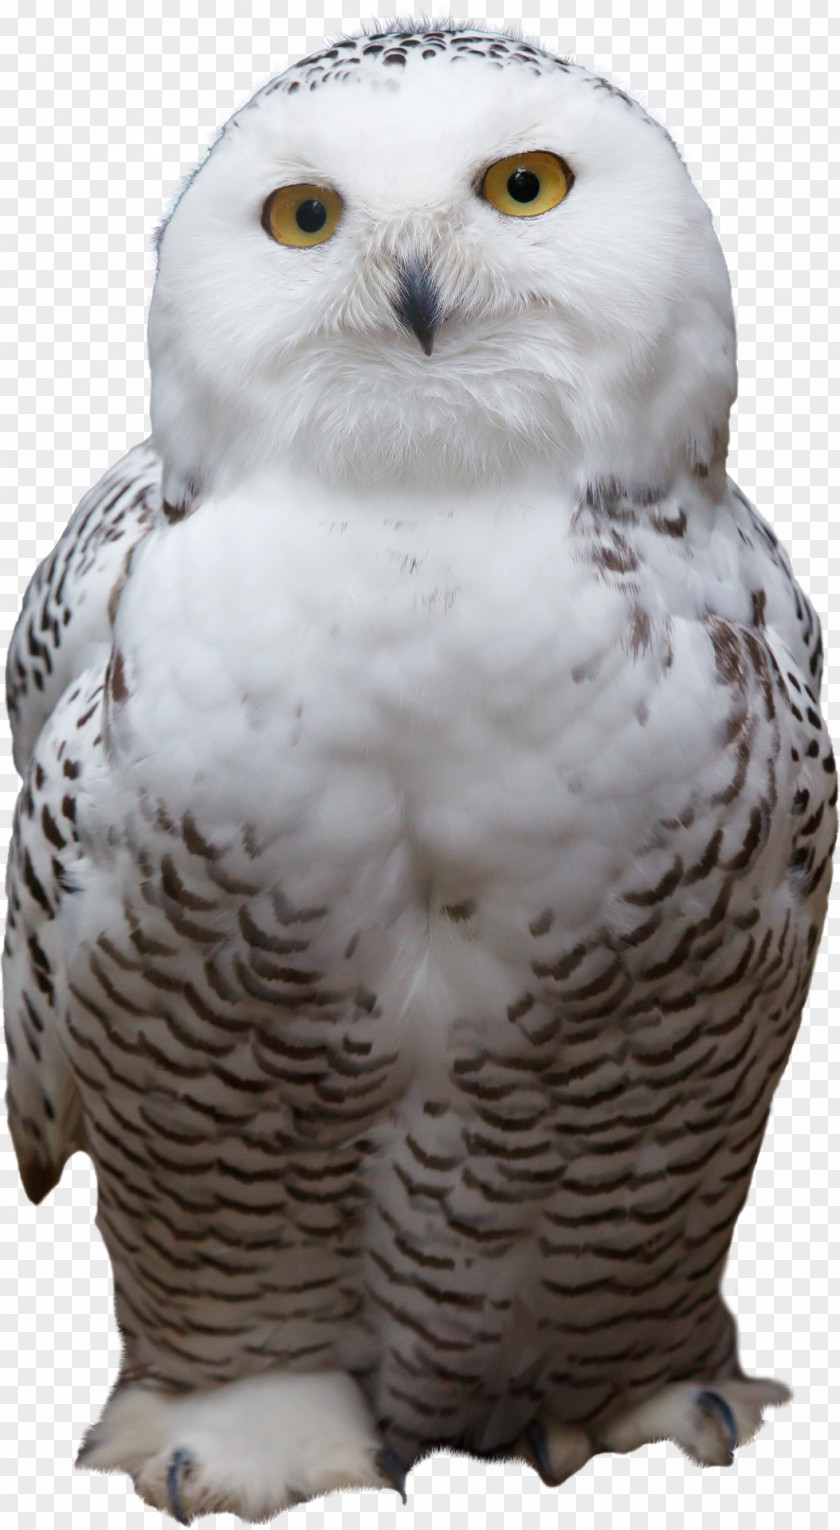 Big Eyes Owl Snowy Bird Horse Animal PNG